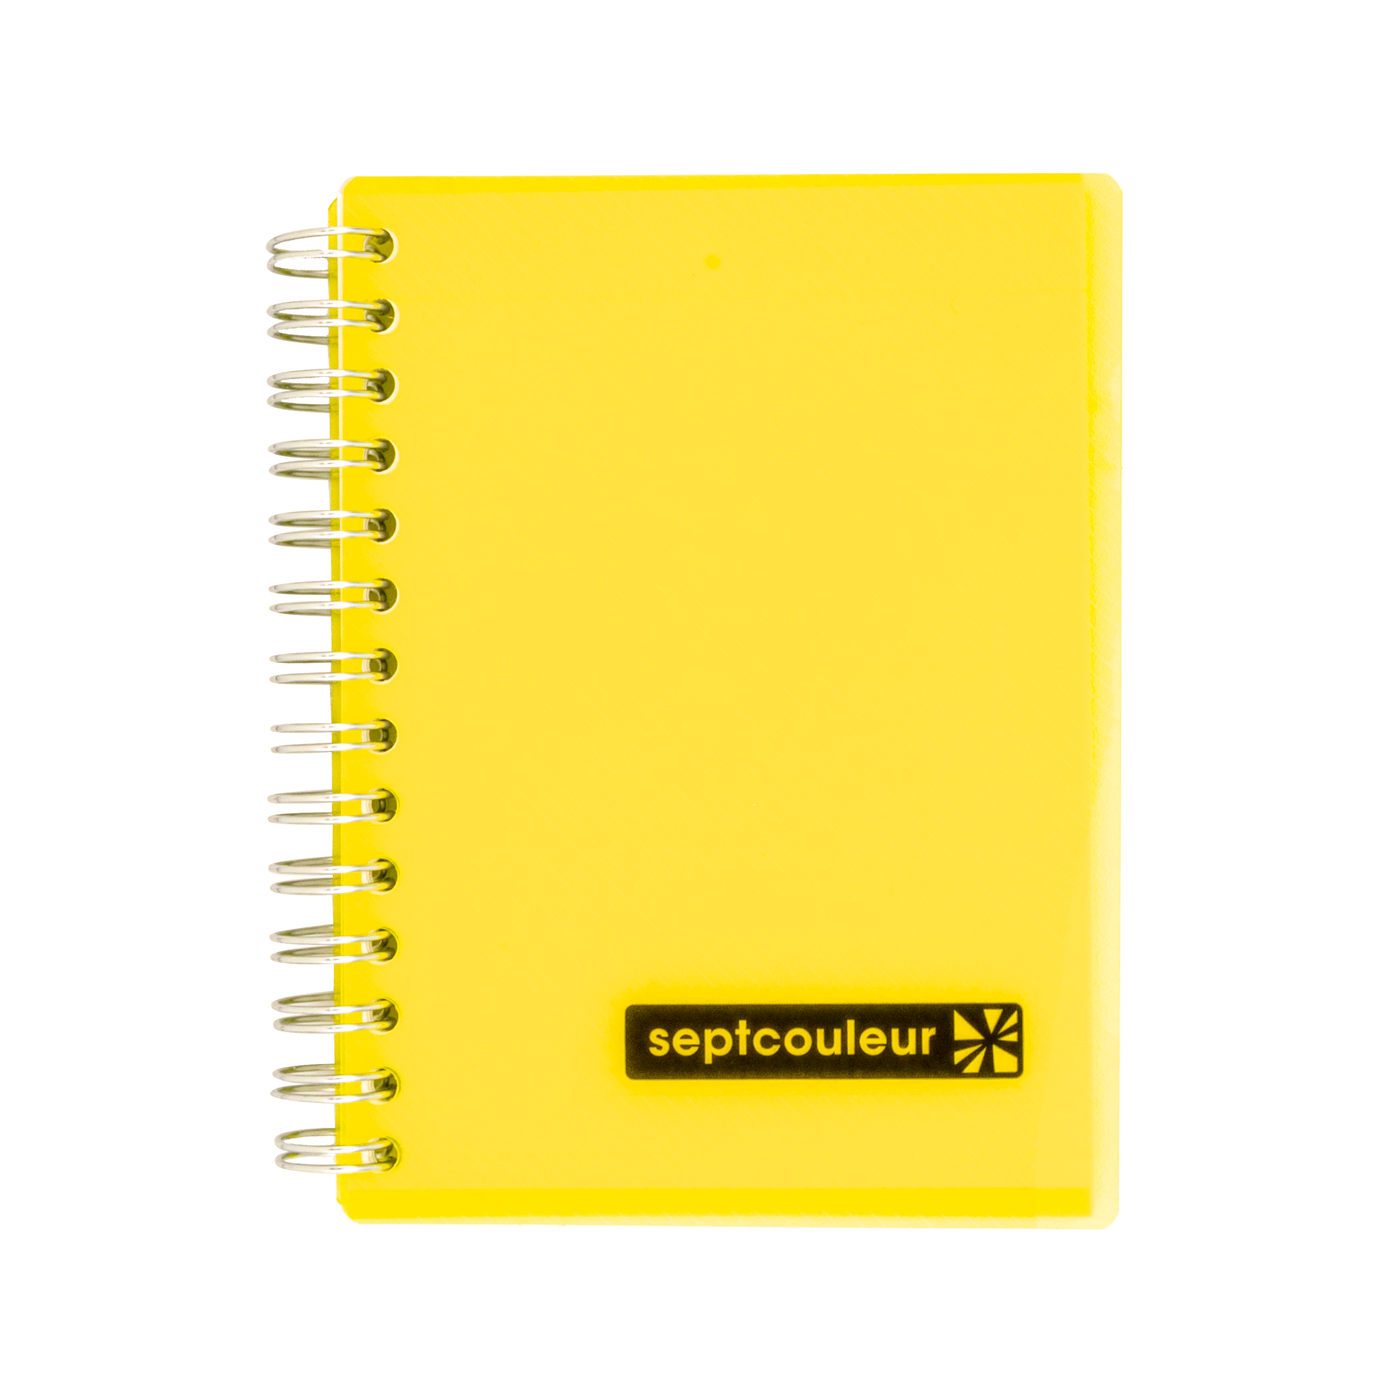 Maruman Septcouleur Notebooks B7 - 6.5mm Rule- Lined